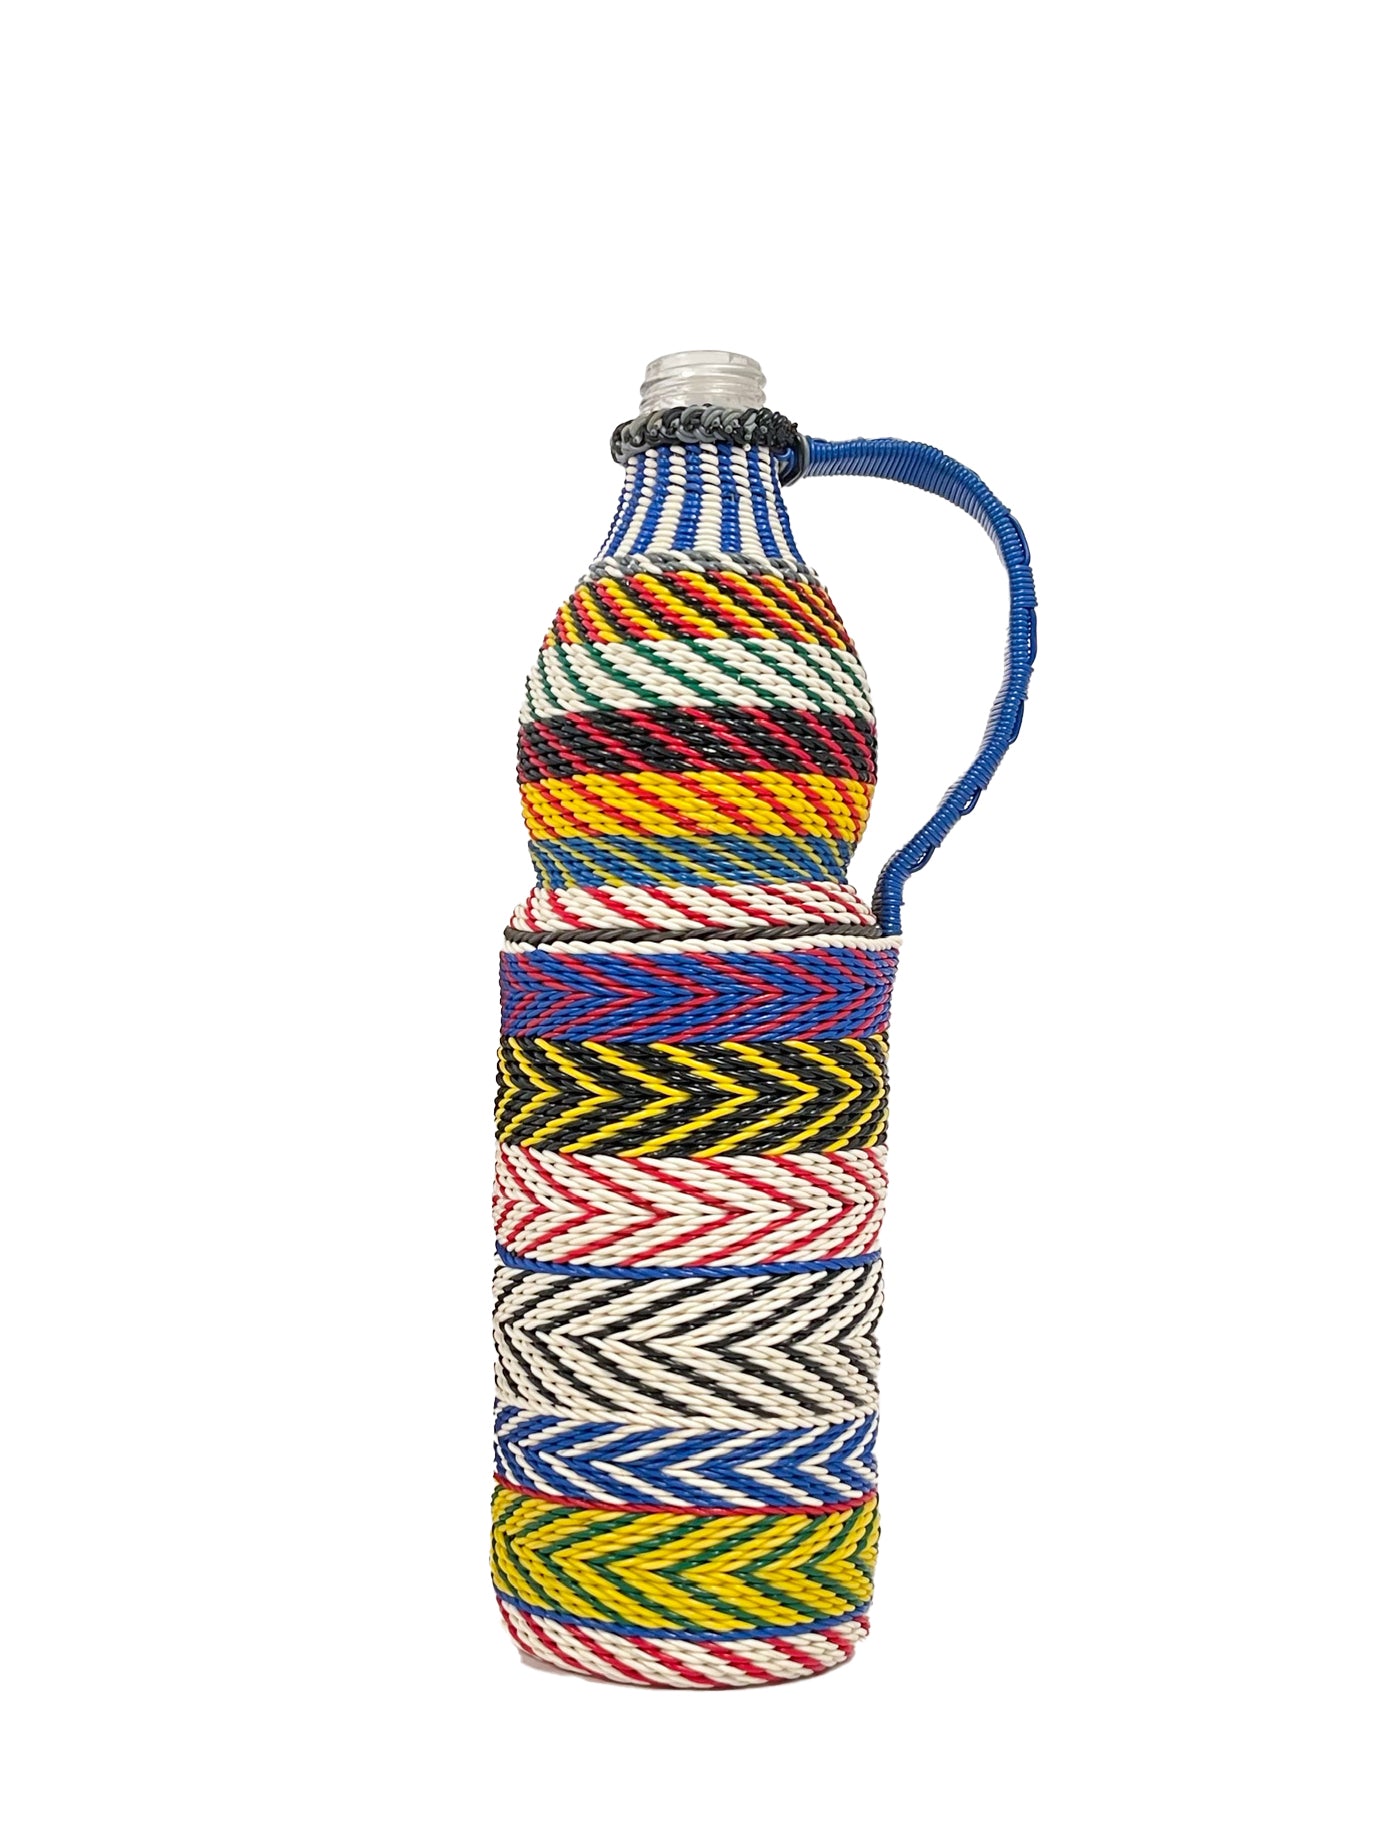 Artisanal Balkan woven glass bottle with handle